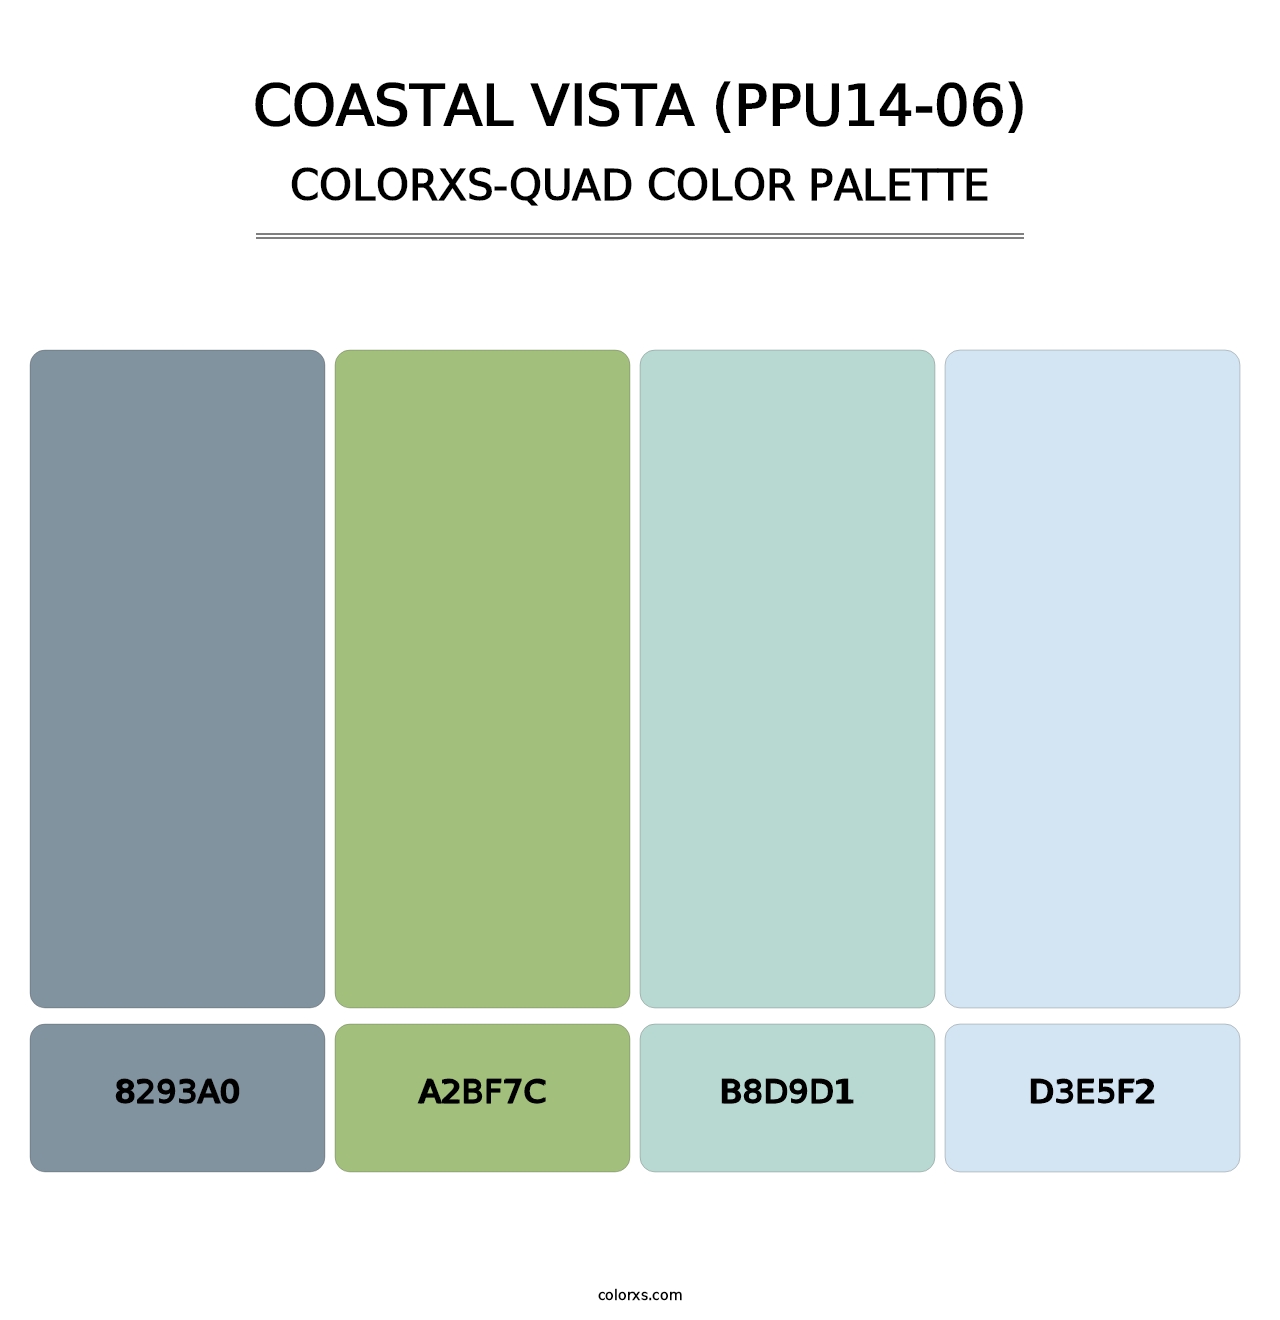 Coastal Vista (PPU14-06) - Colorxs Quad Palette